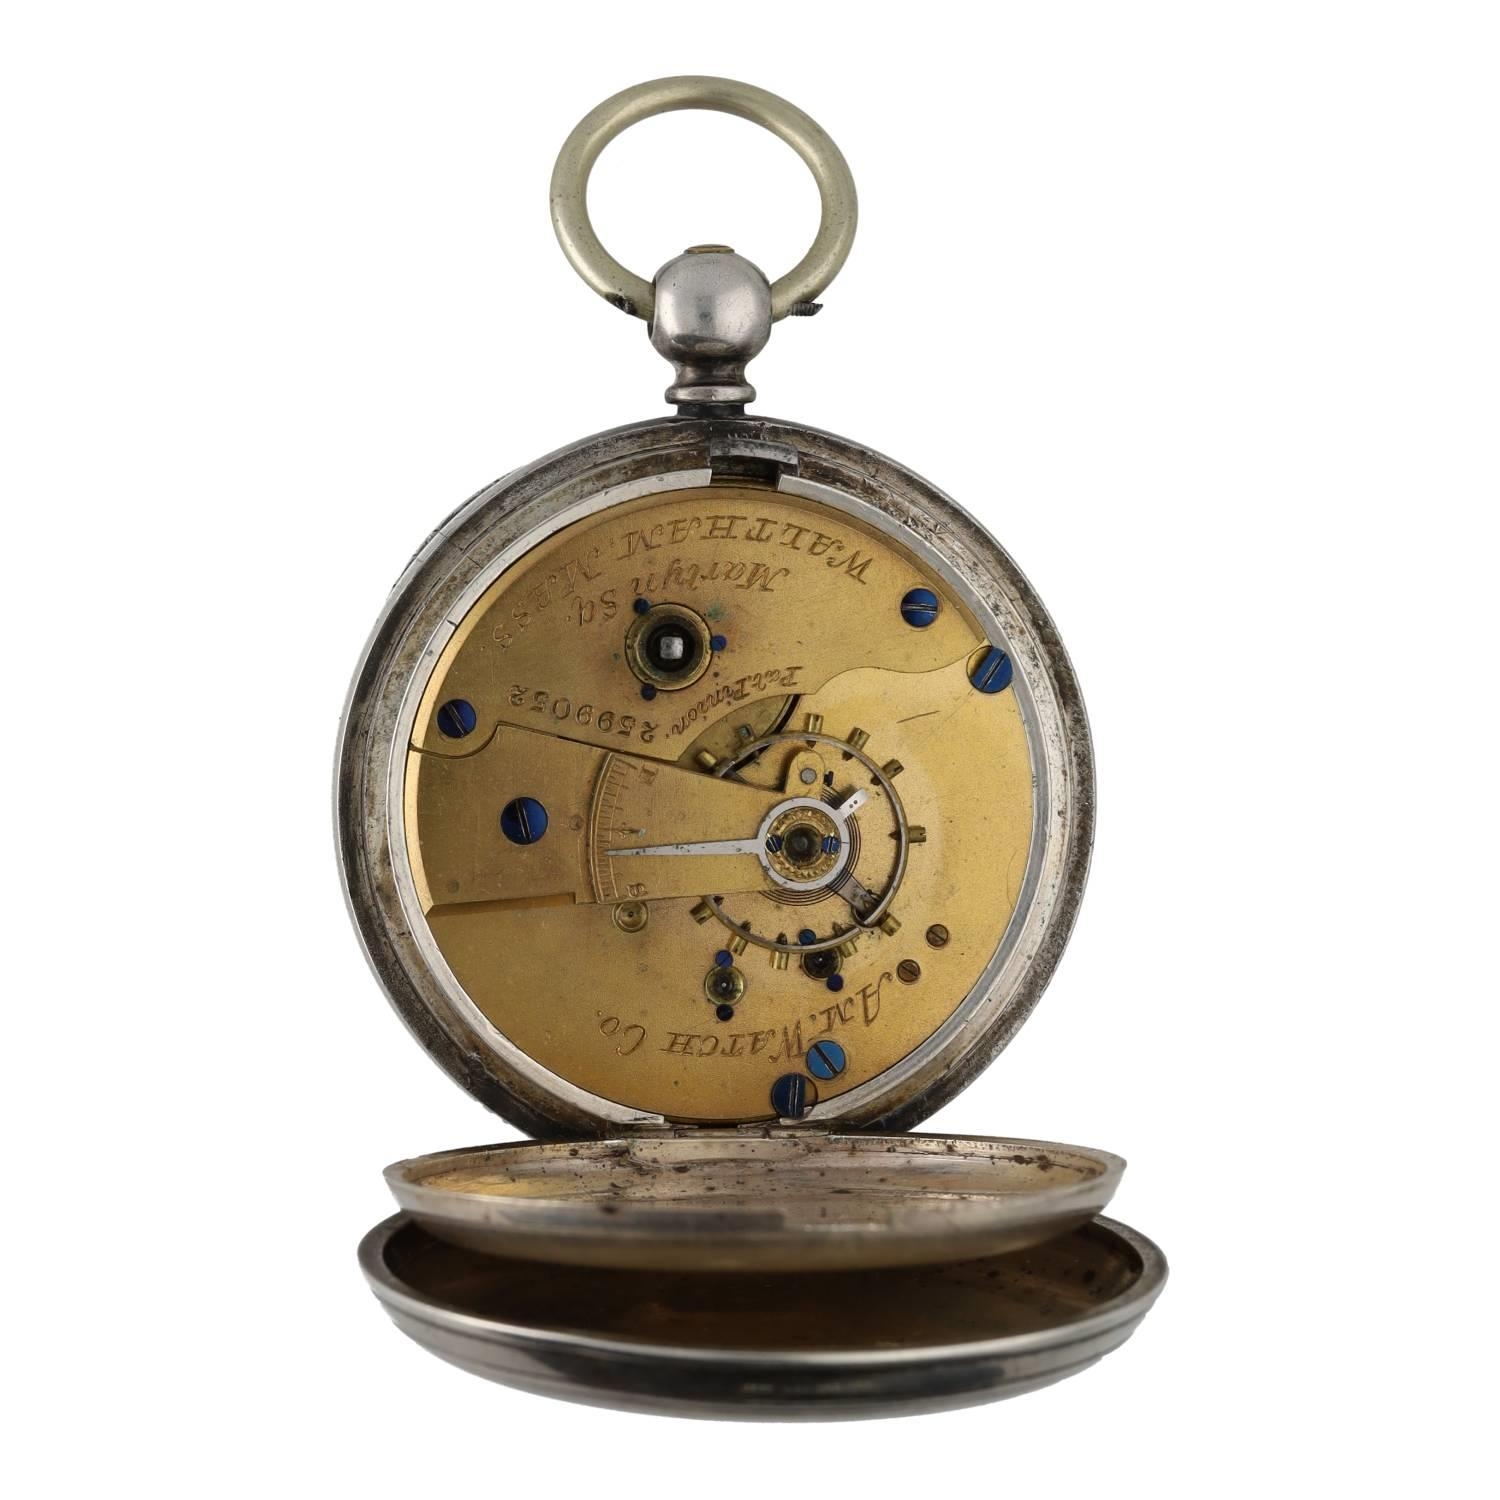 American Waltham 'Martyn Sq.' silver lever pocket watch, circa 1884, serial no. 2599052, signed - Image 2 of 3